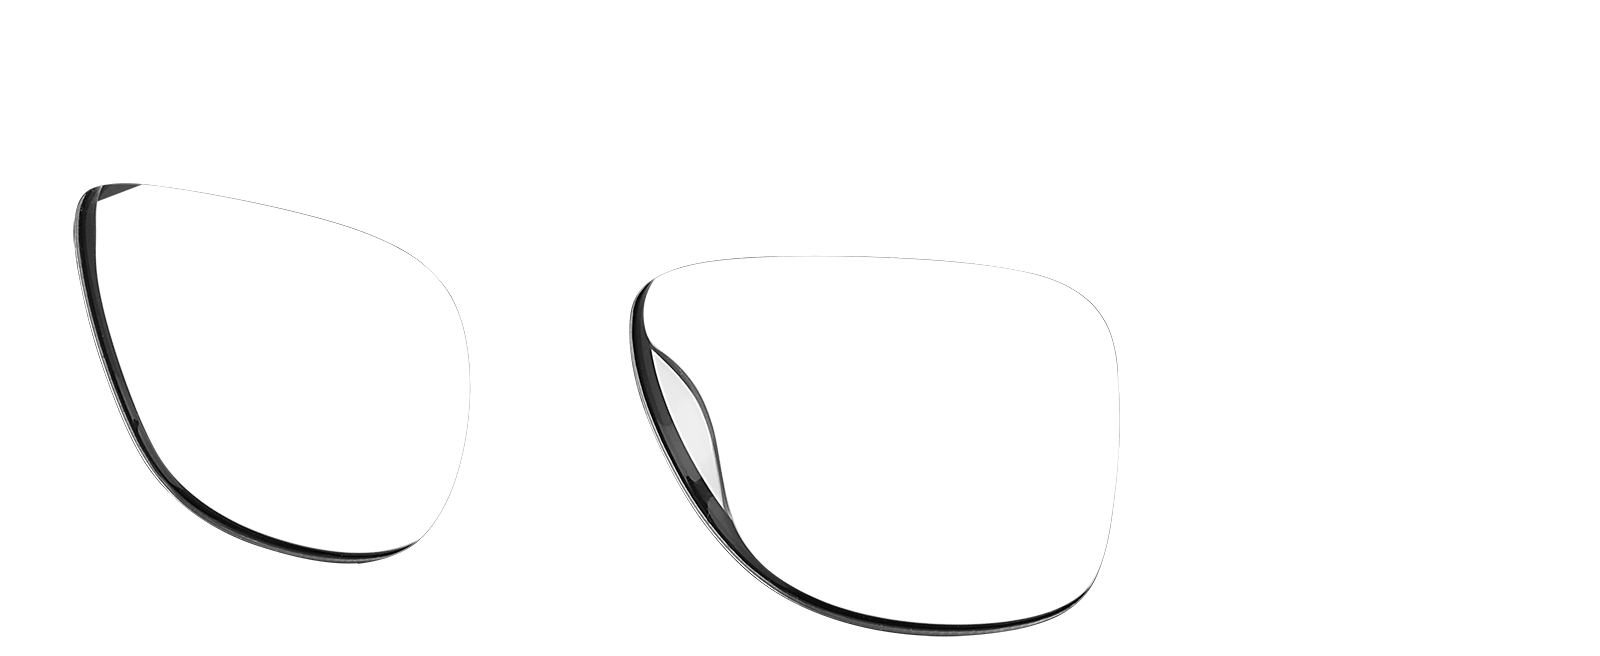 Sausalito Eyeglassesangle lens image